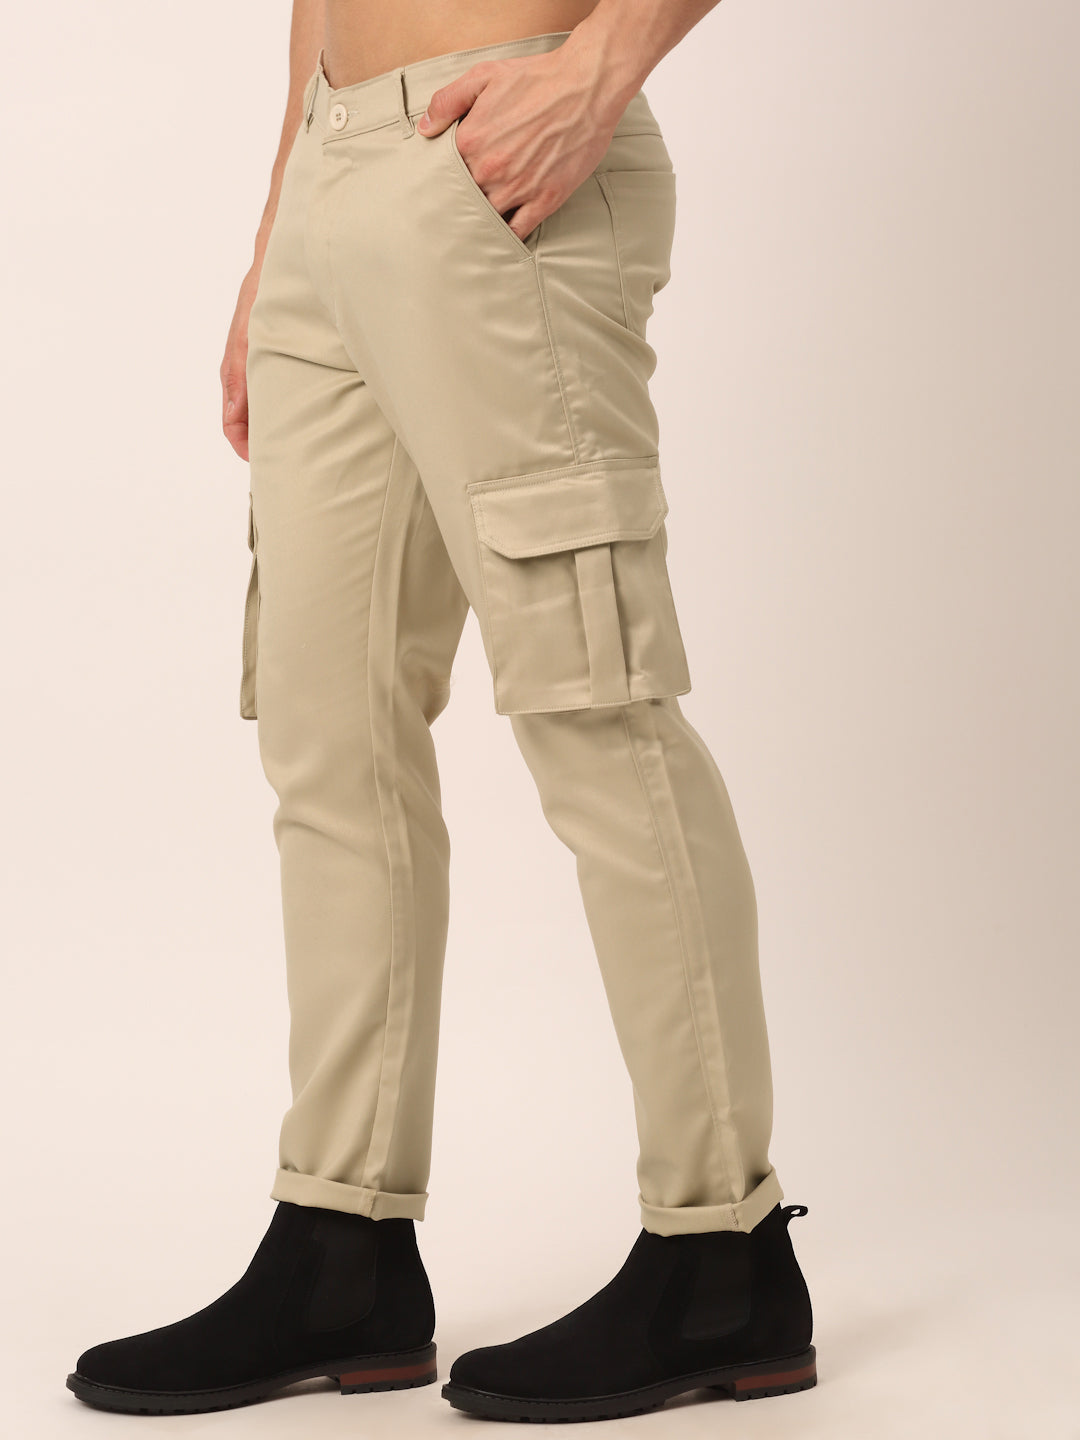 Cargo Pants,Casual Pants ,Men Pants ,6 Pockets Pants.